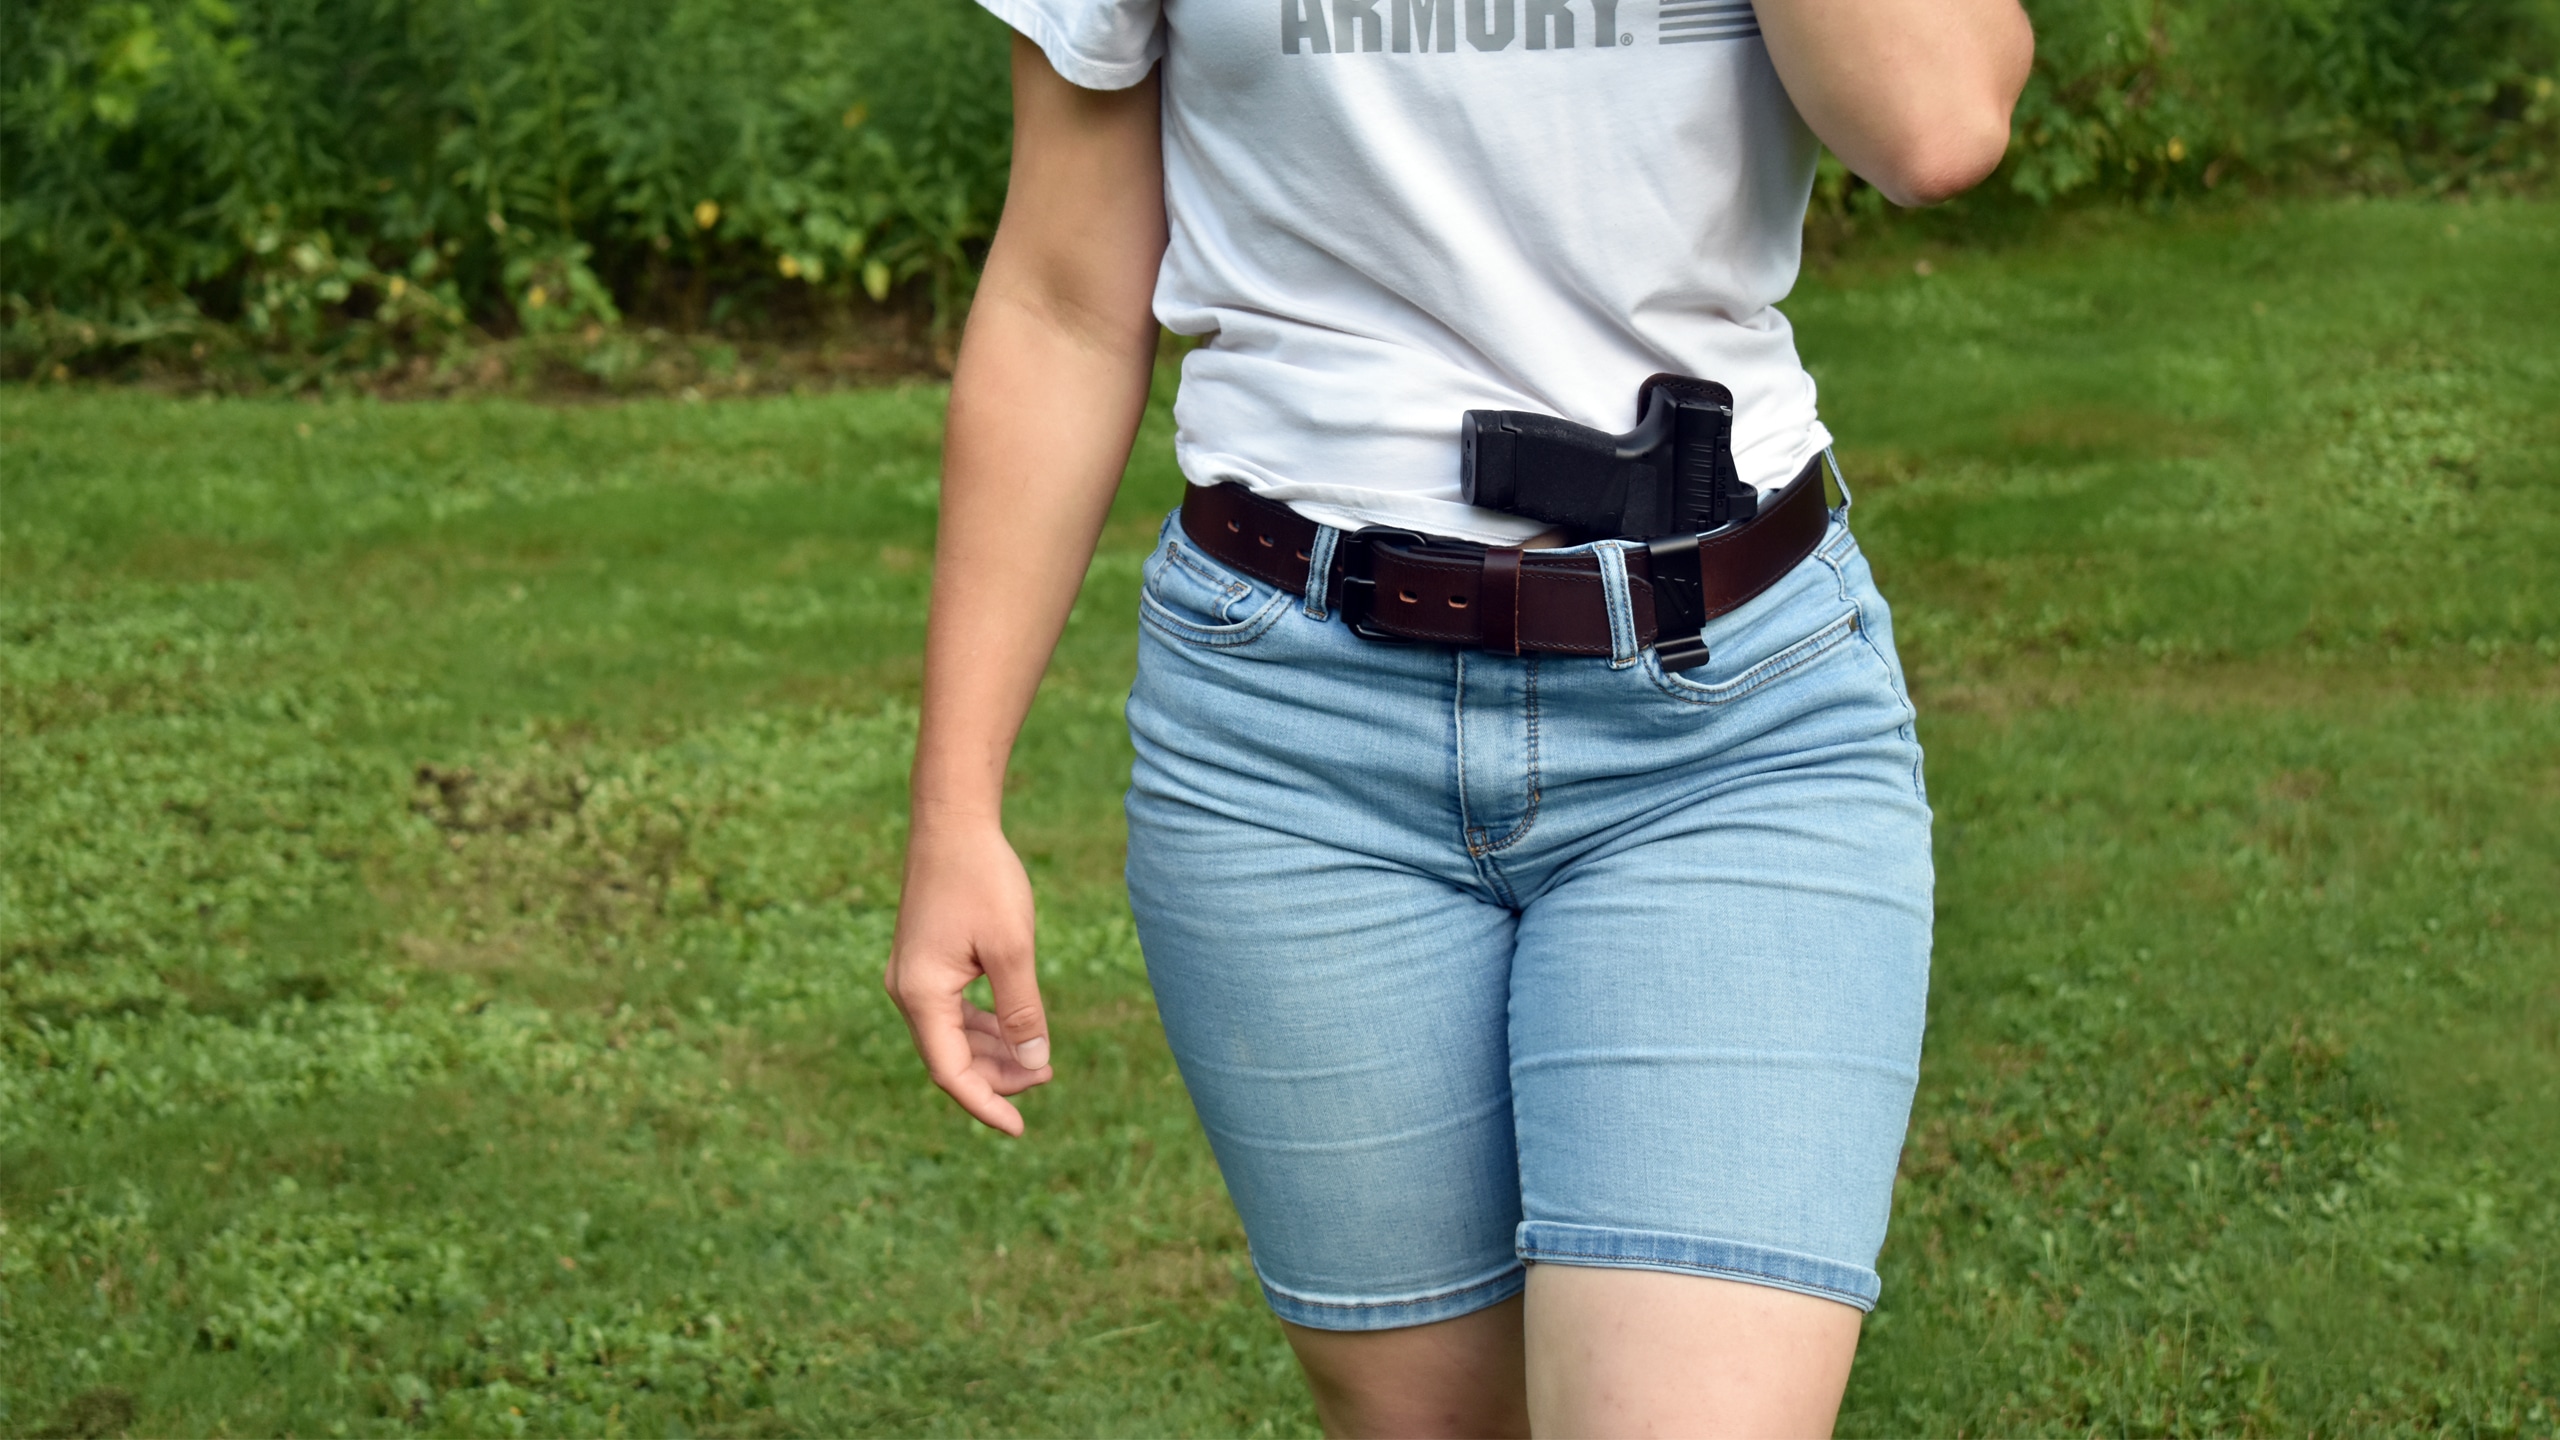 https://www.thearmorylife.com/wp-content/uploads/2023/03/womans-guide-to-avoiding-gun-belt-mistake.jpg